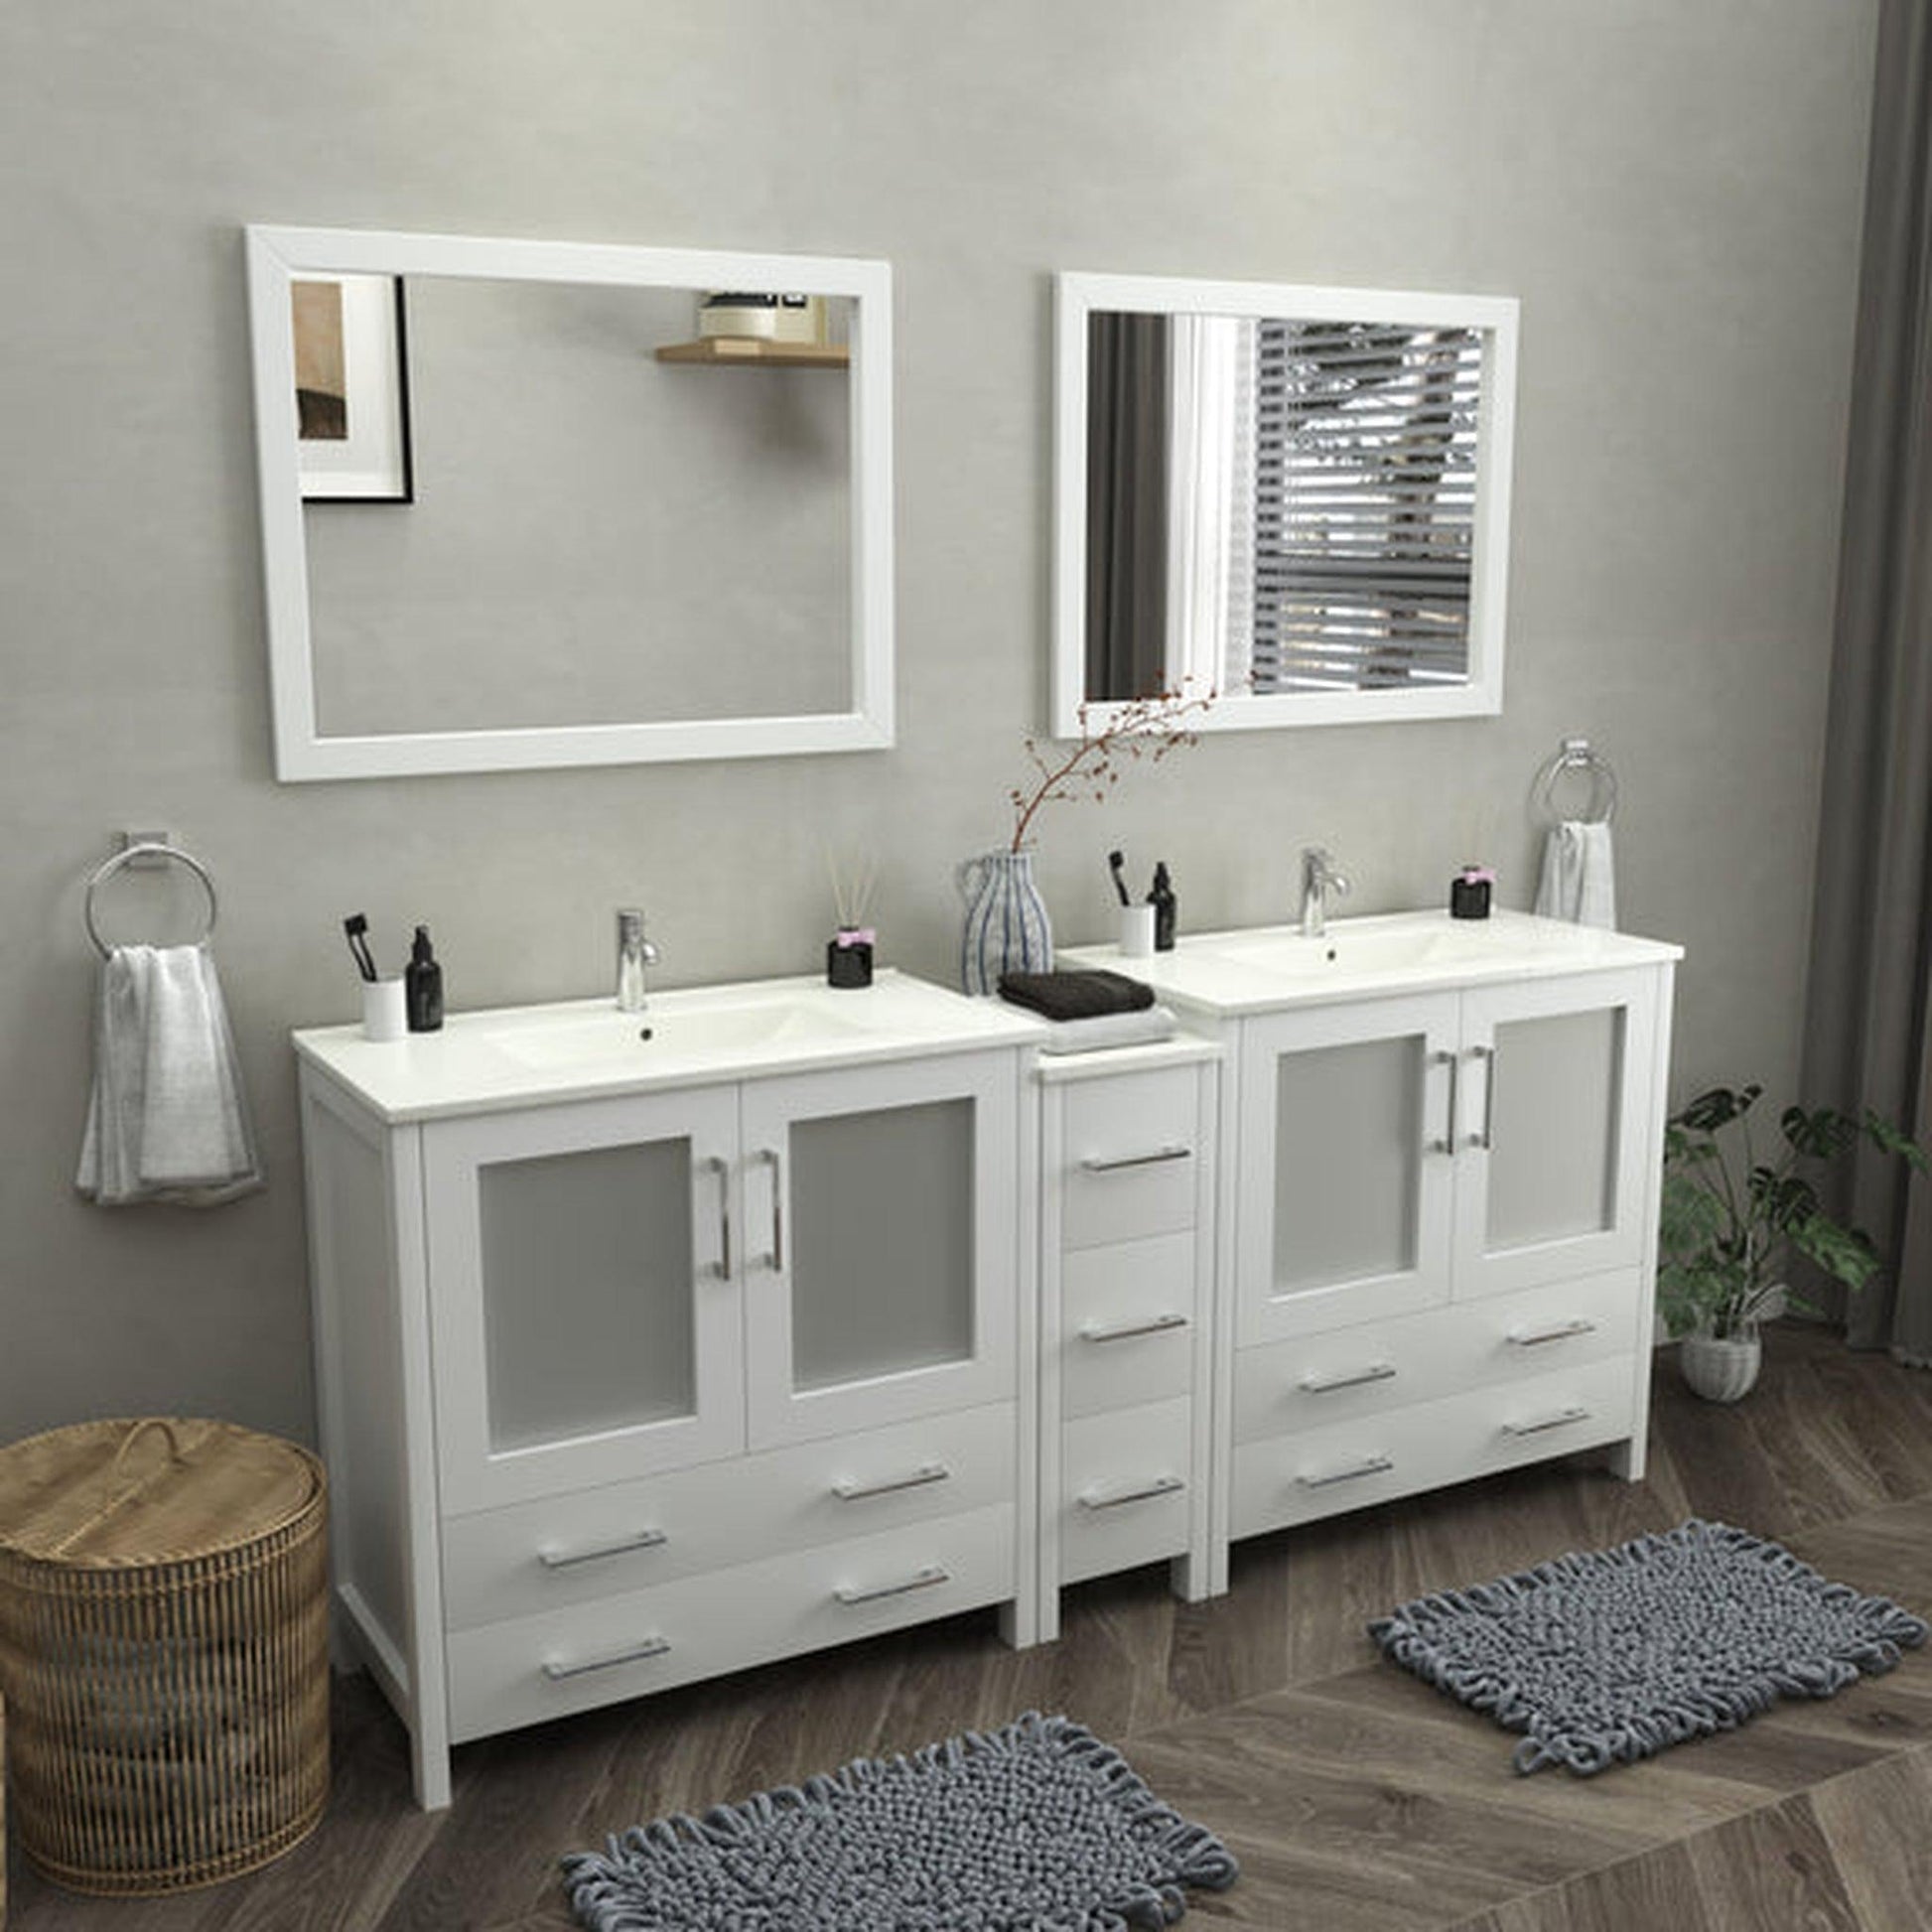 Vanity Art 84-Inch Double Sink Bathroom Vanity Set with Ceramic Top Grey